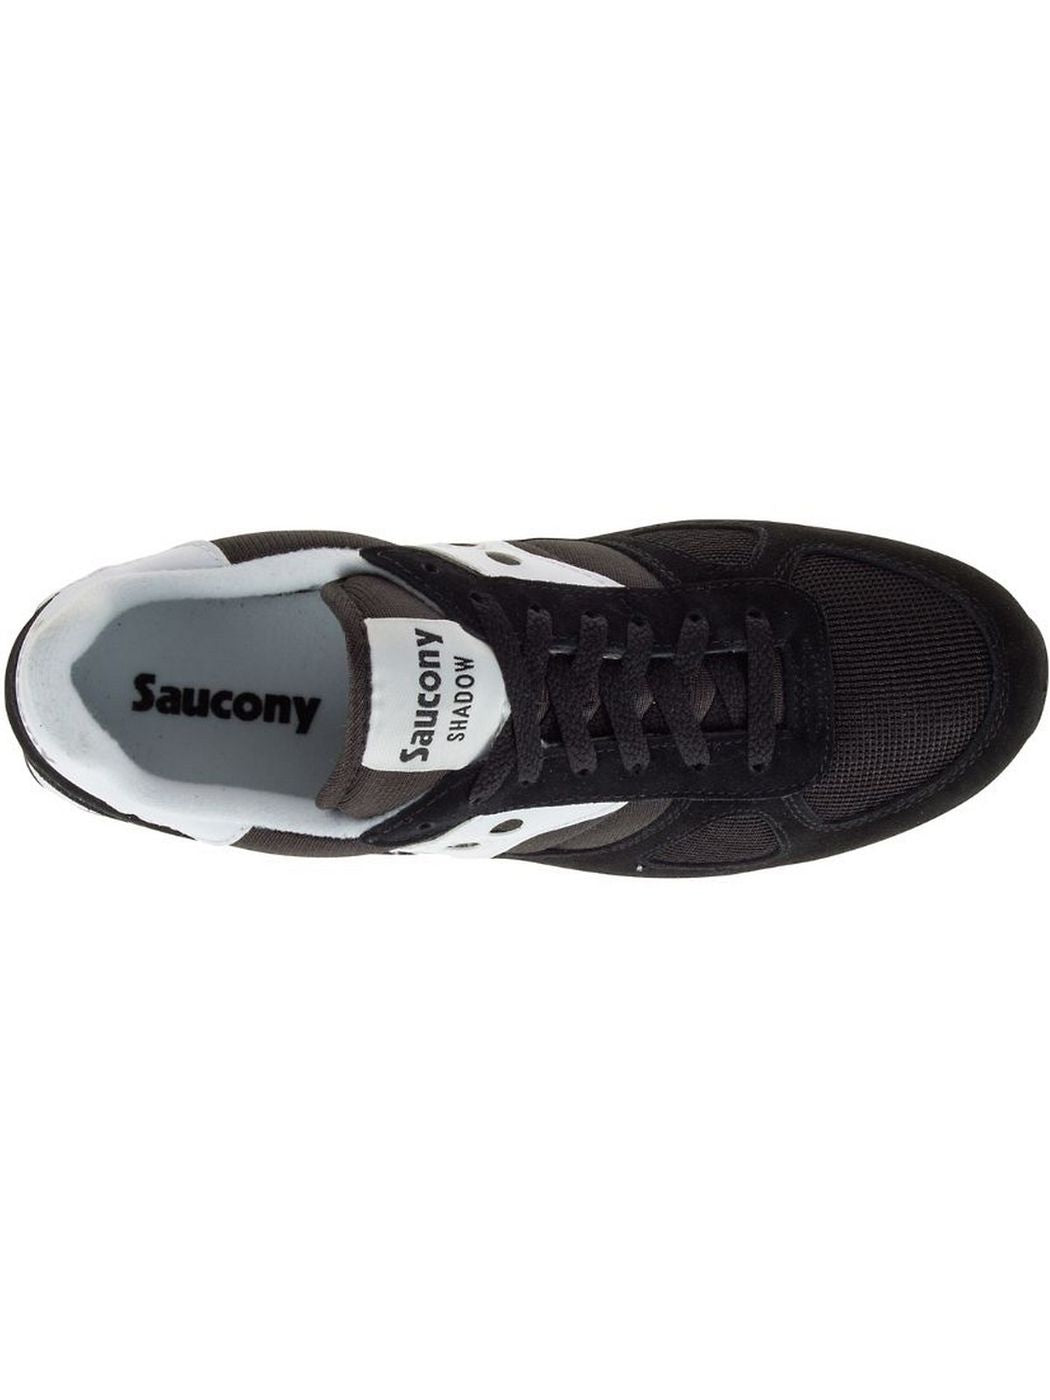 SAUCONY Sneaker Unisex adulto Shadow original 2108 Nero